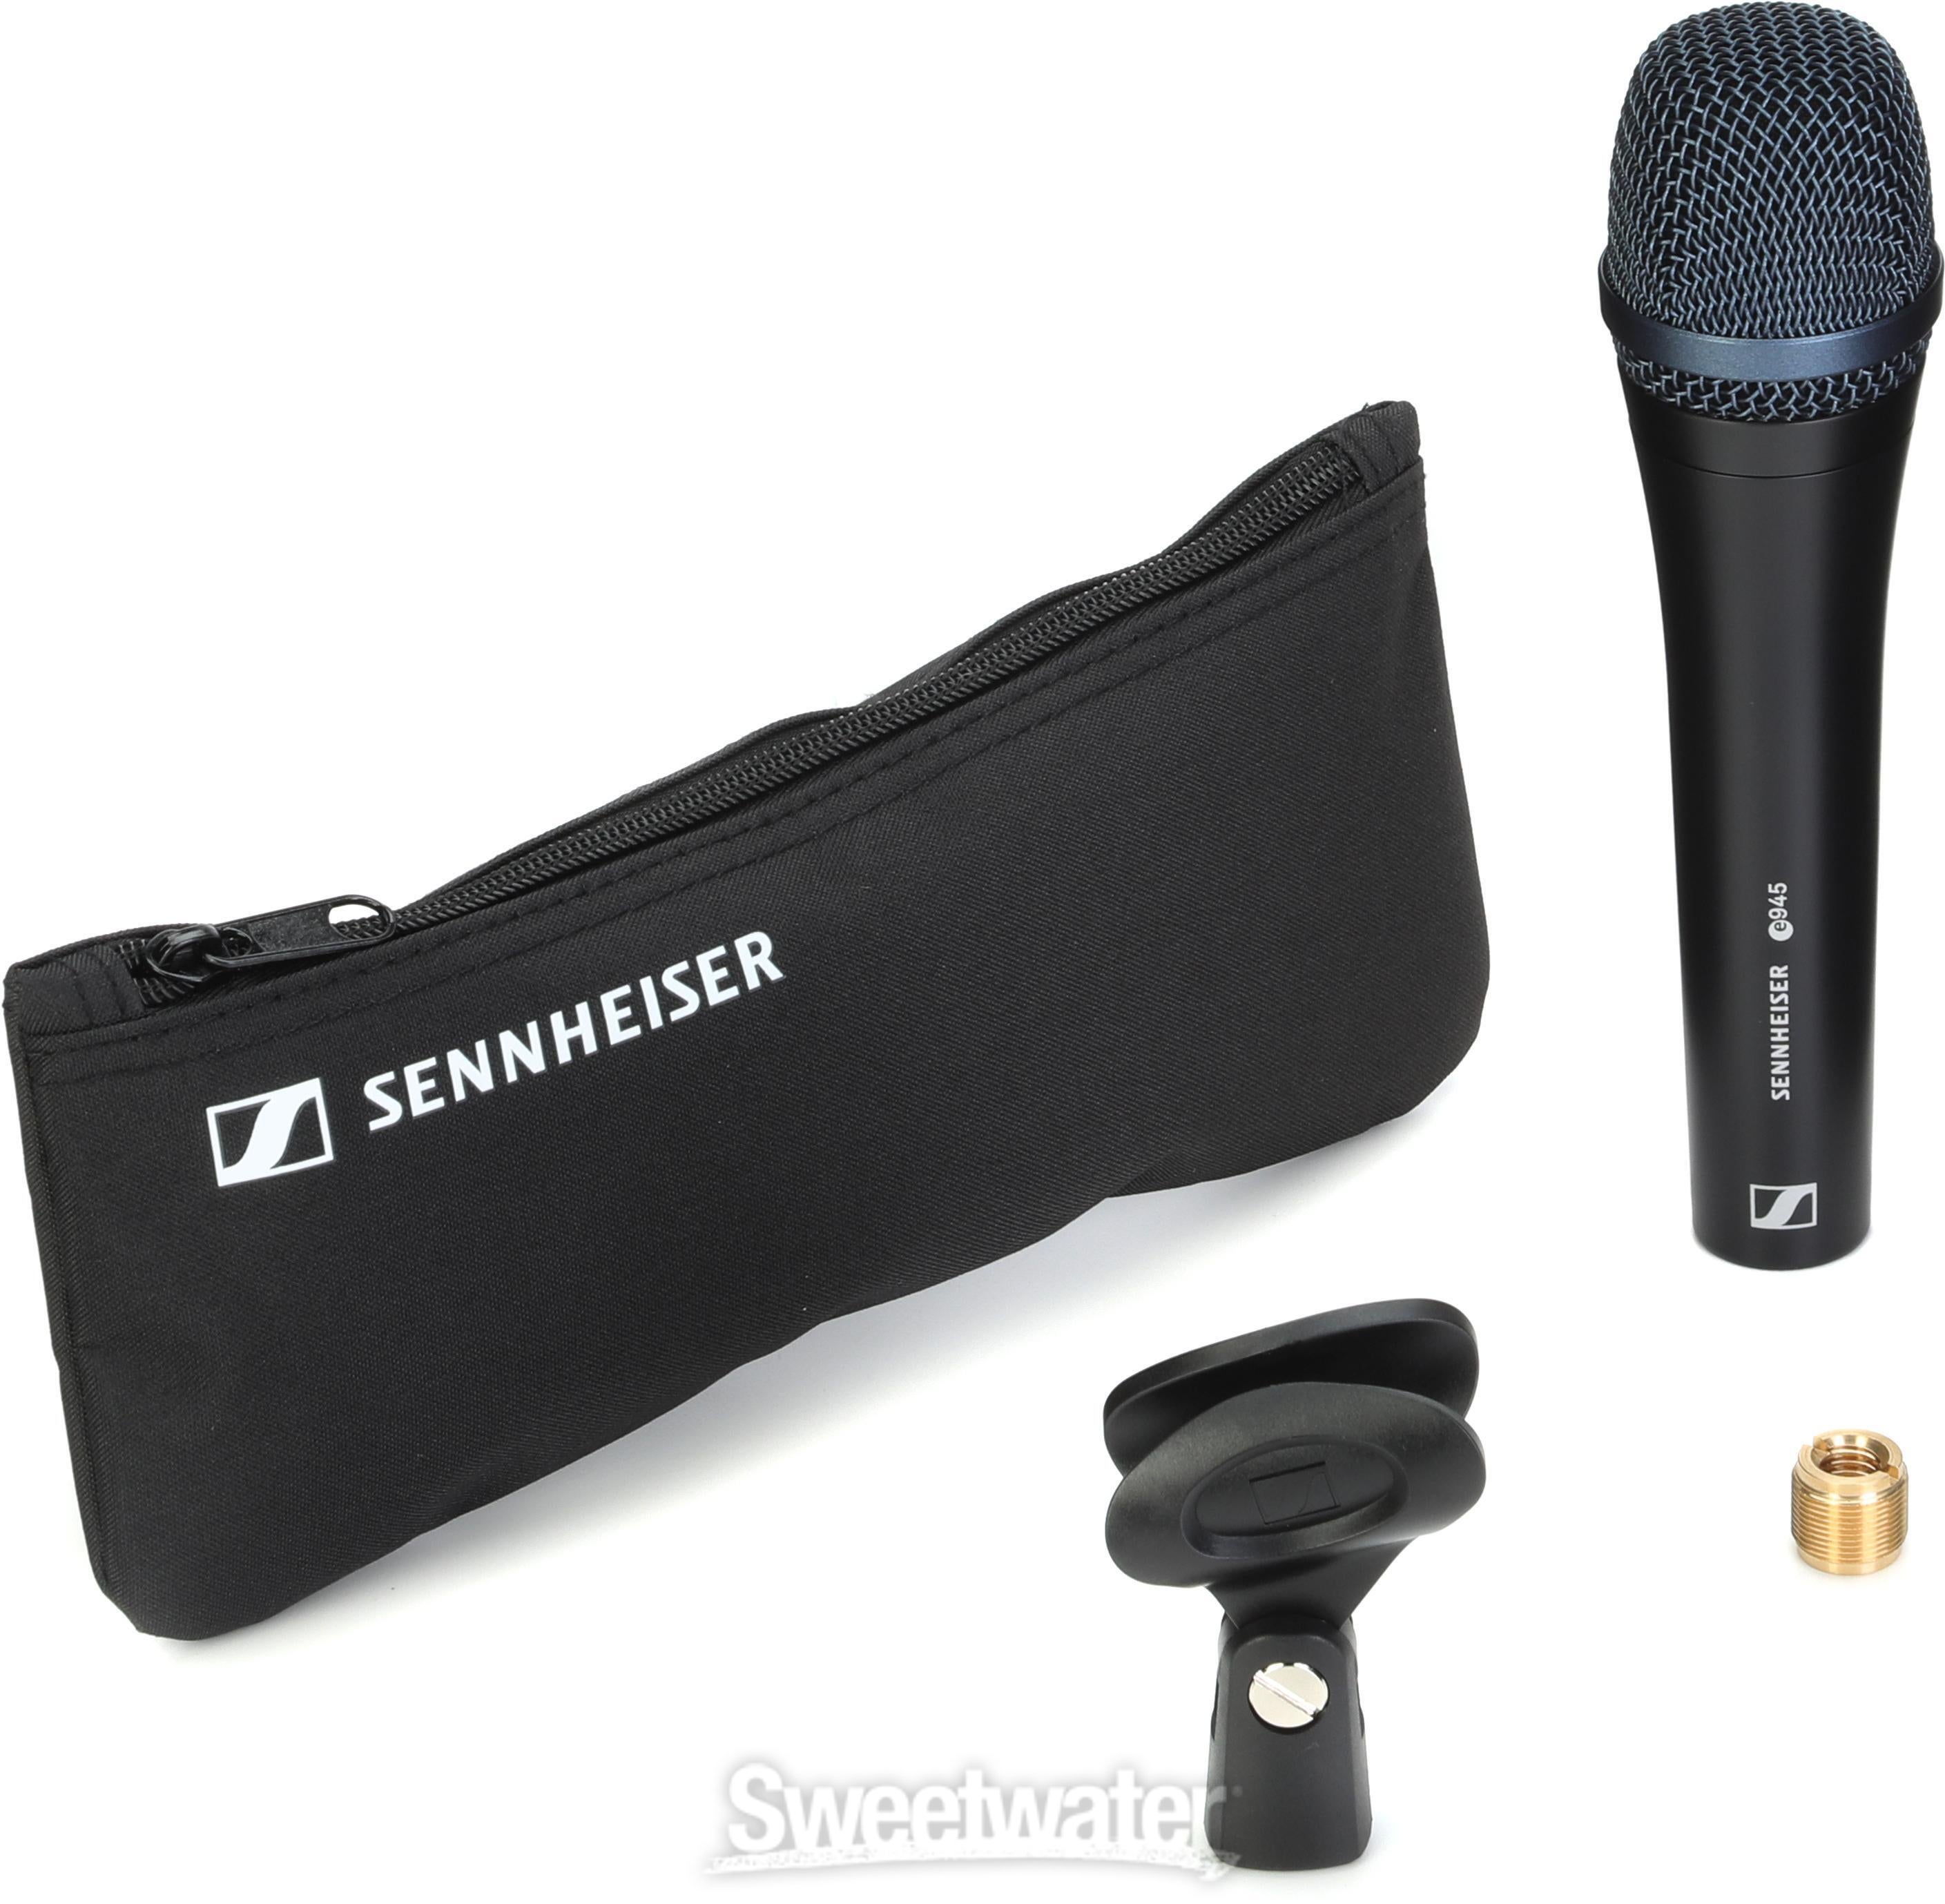 Sennheiser e 945 Supercardioid Dynamic Vocal Microphone | Sweetwater